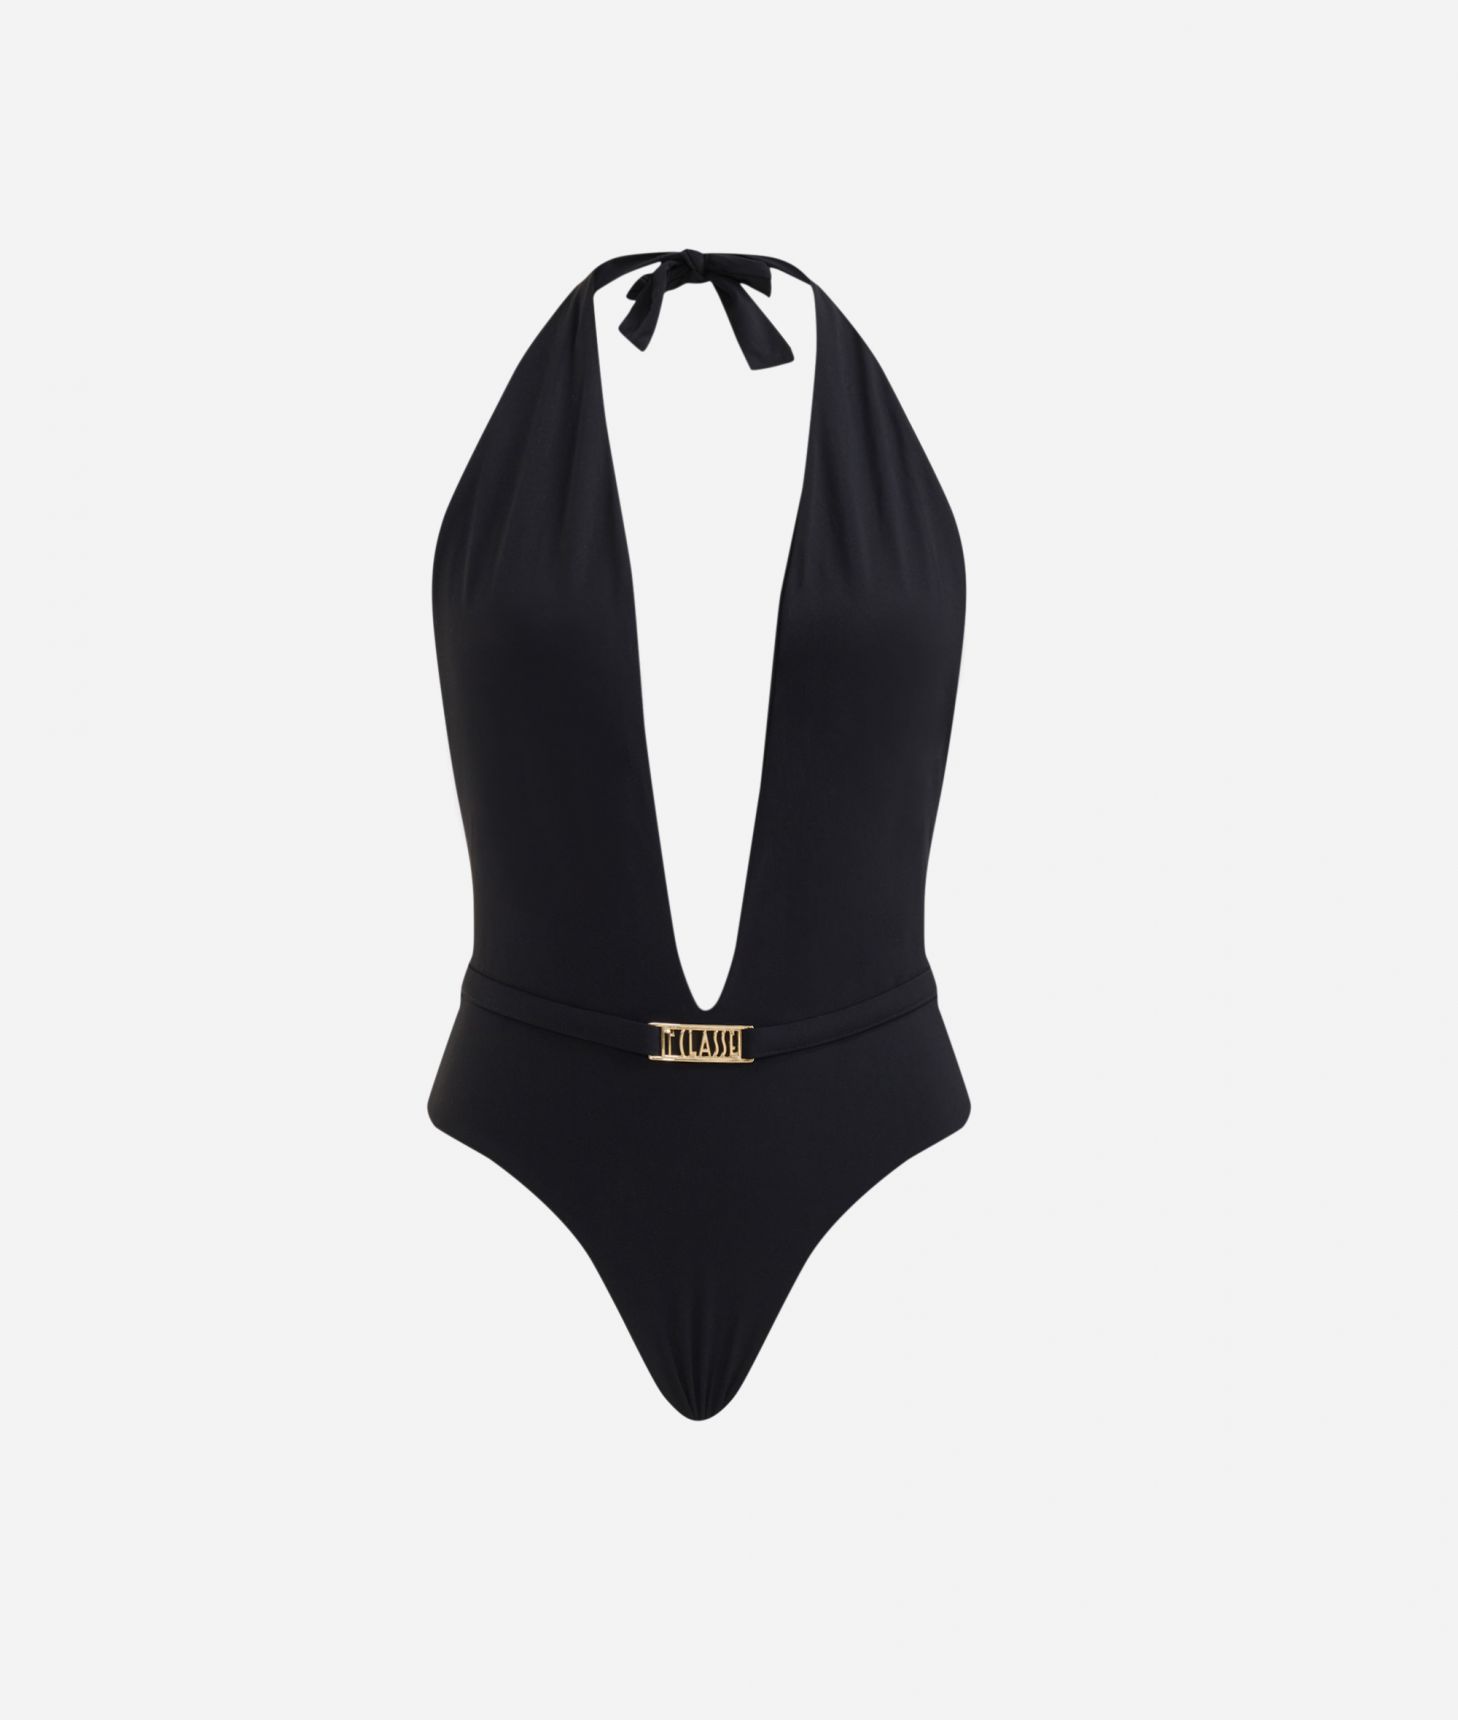 Luxury one-piece jewel swimsuit Black,front